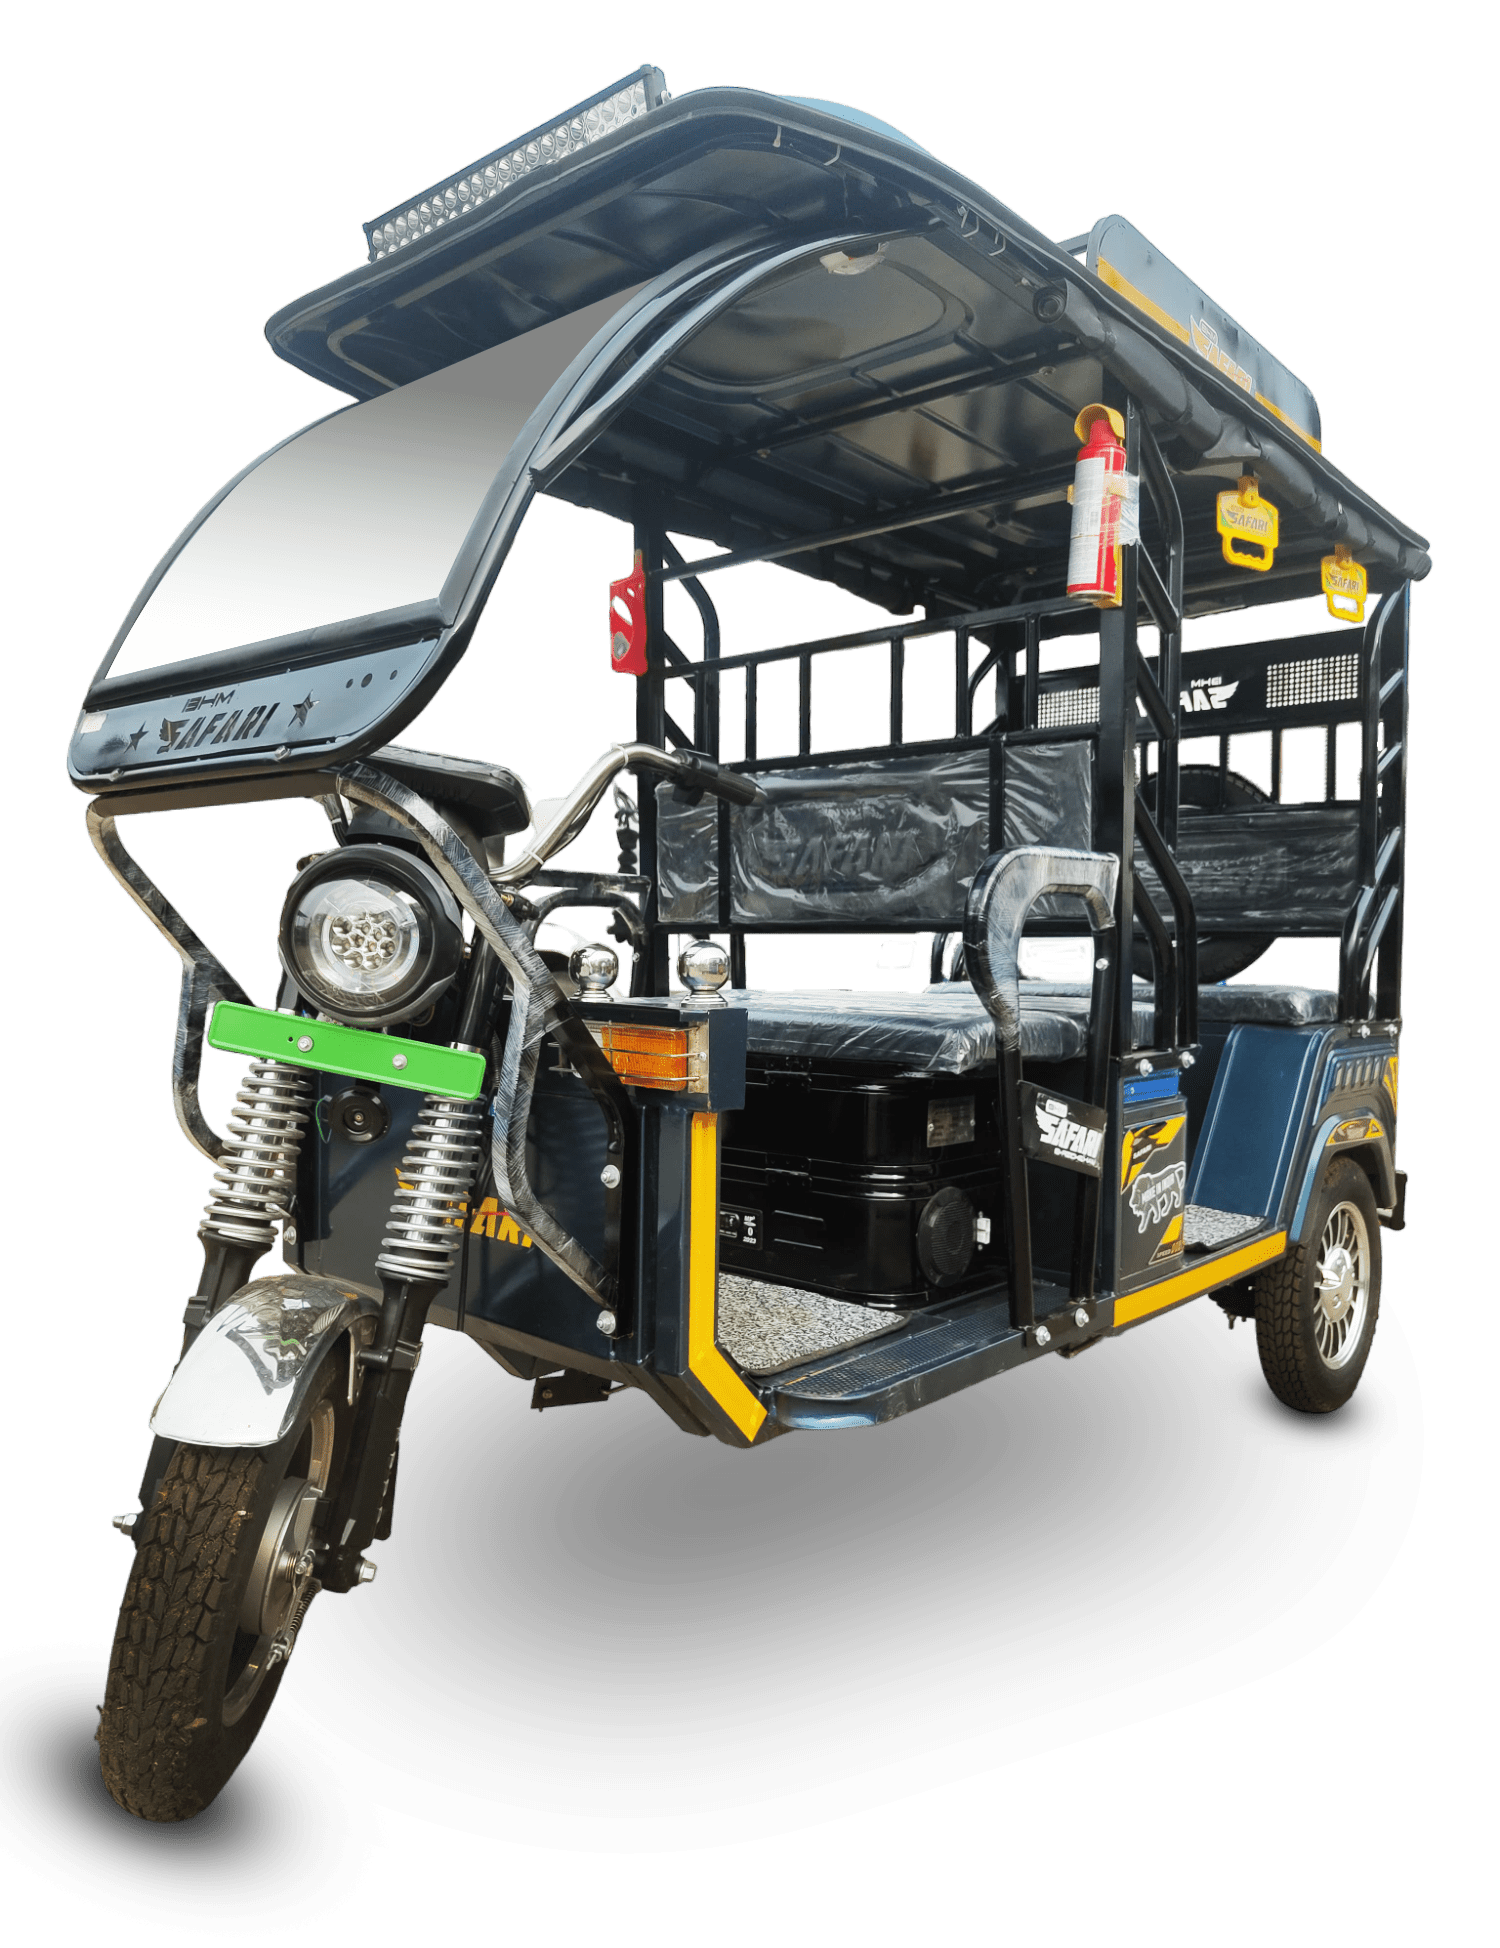 bhm safari e rickshaw photos